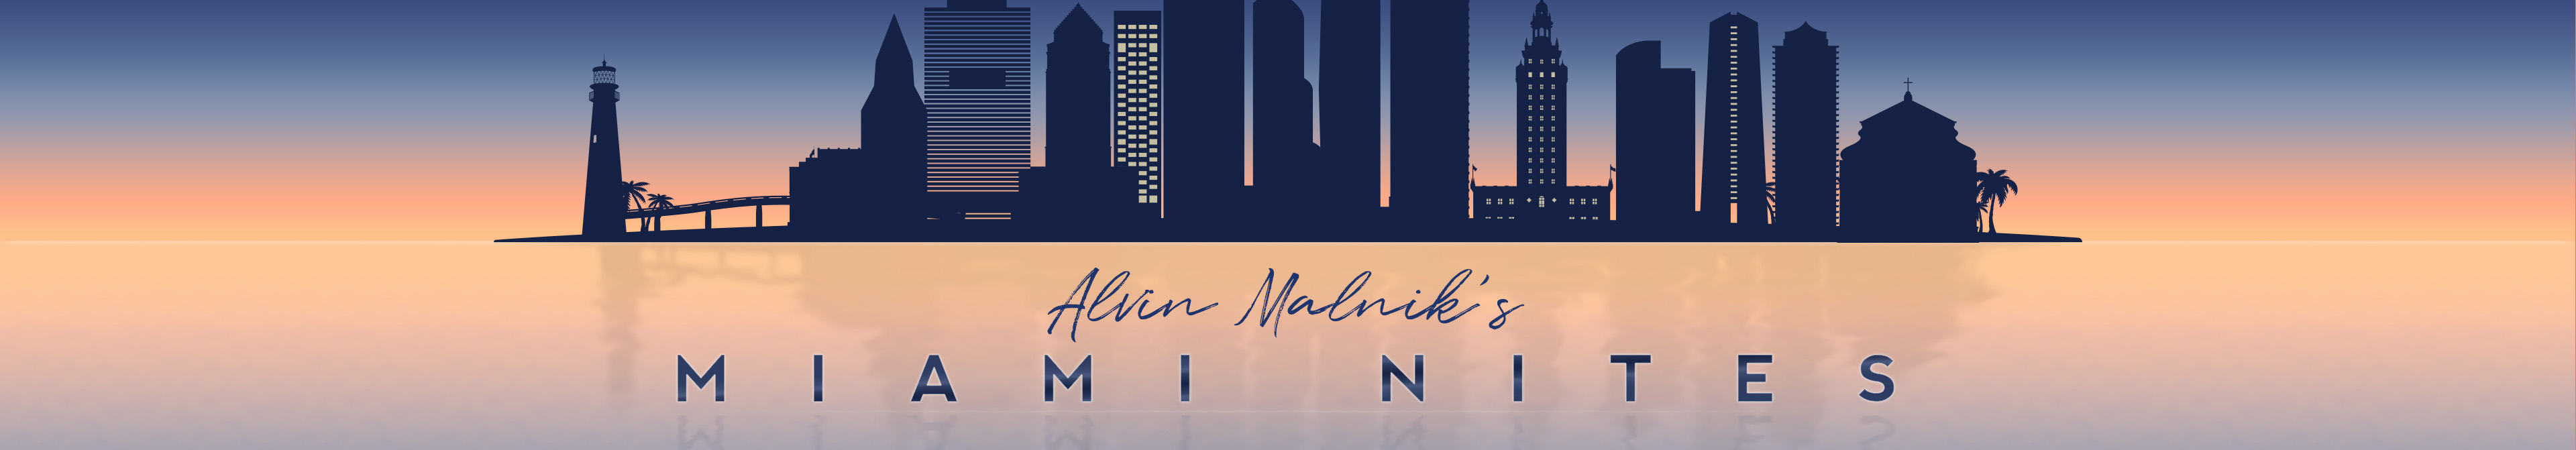 Al Malnik Miaminites Header Image